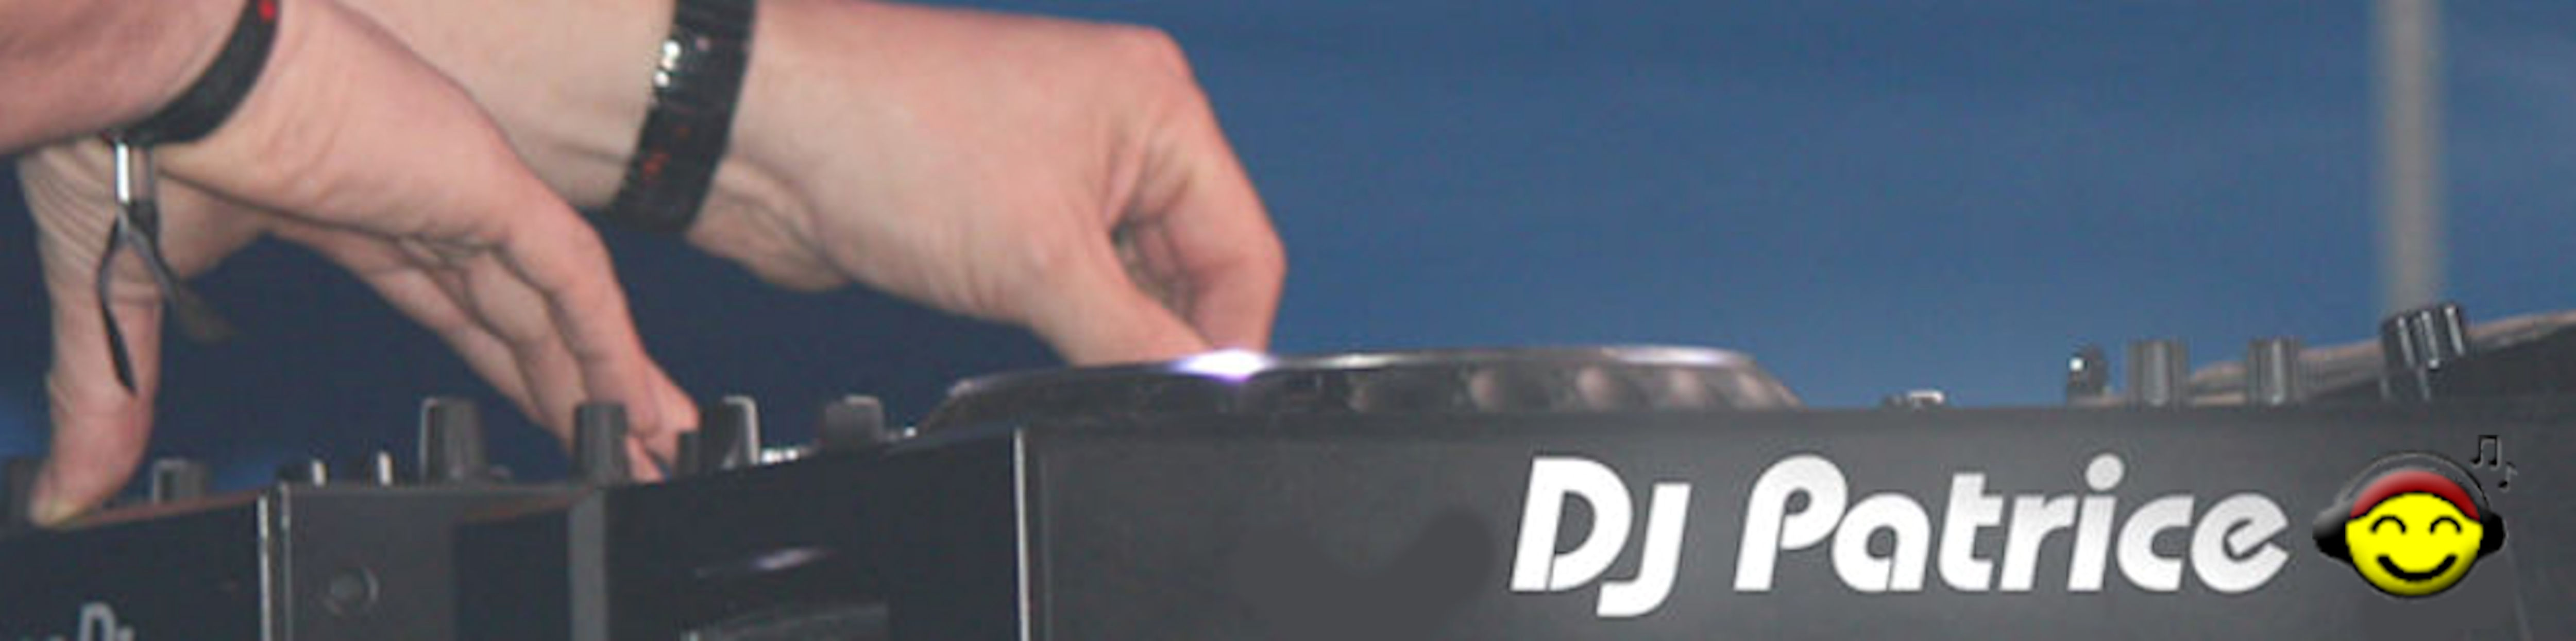 DJ PATRICE Logo